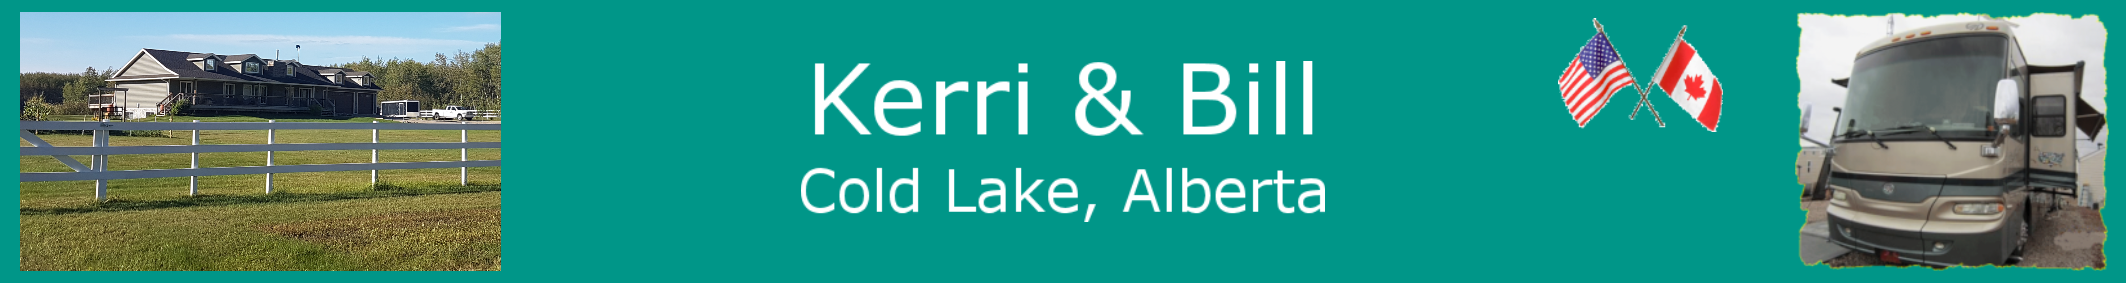 Beill & Kerri - Cold Lake